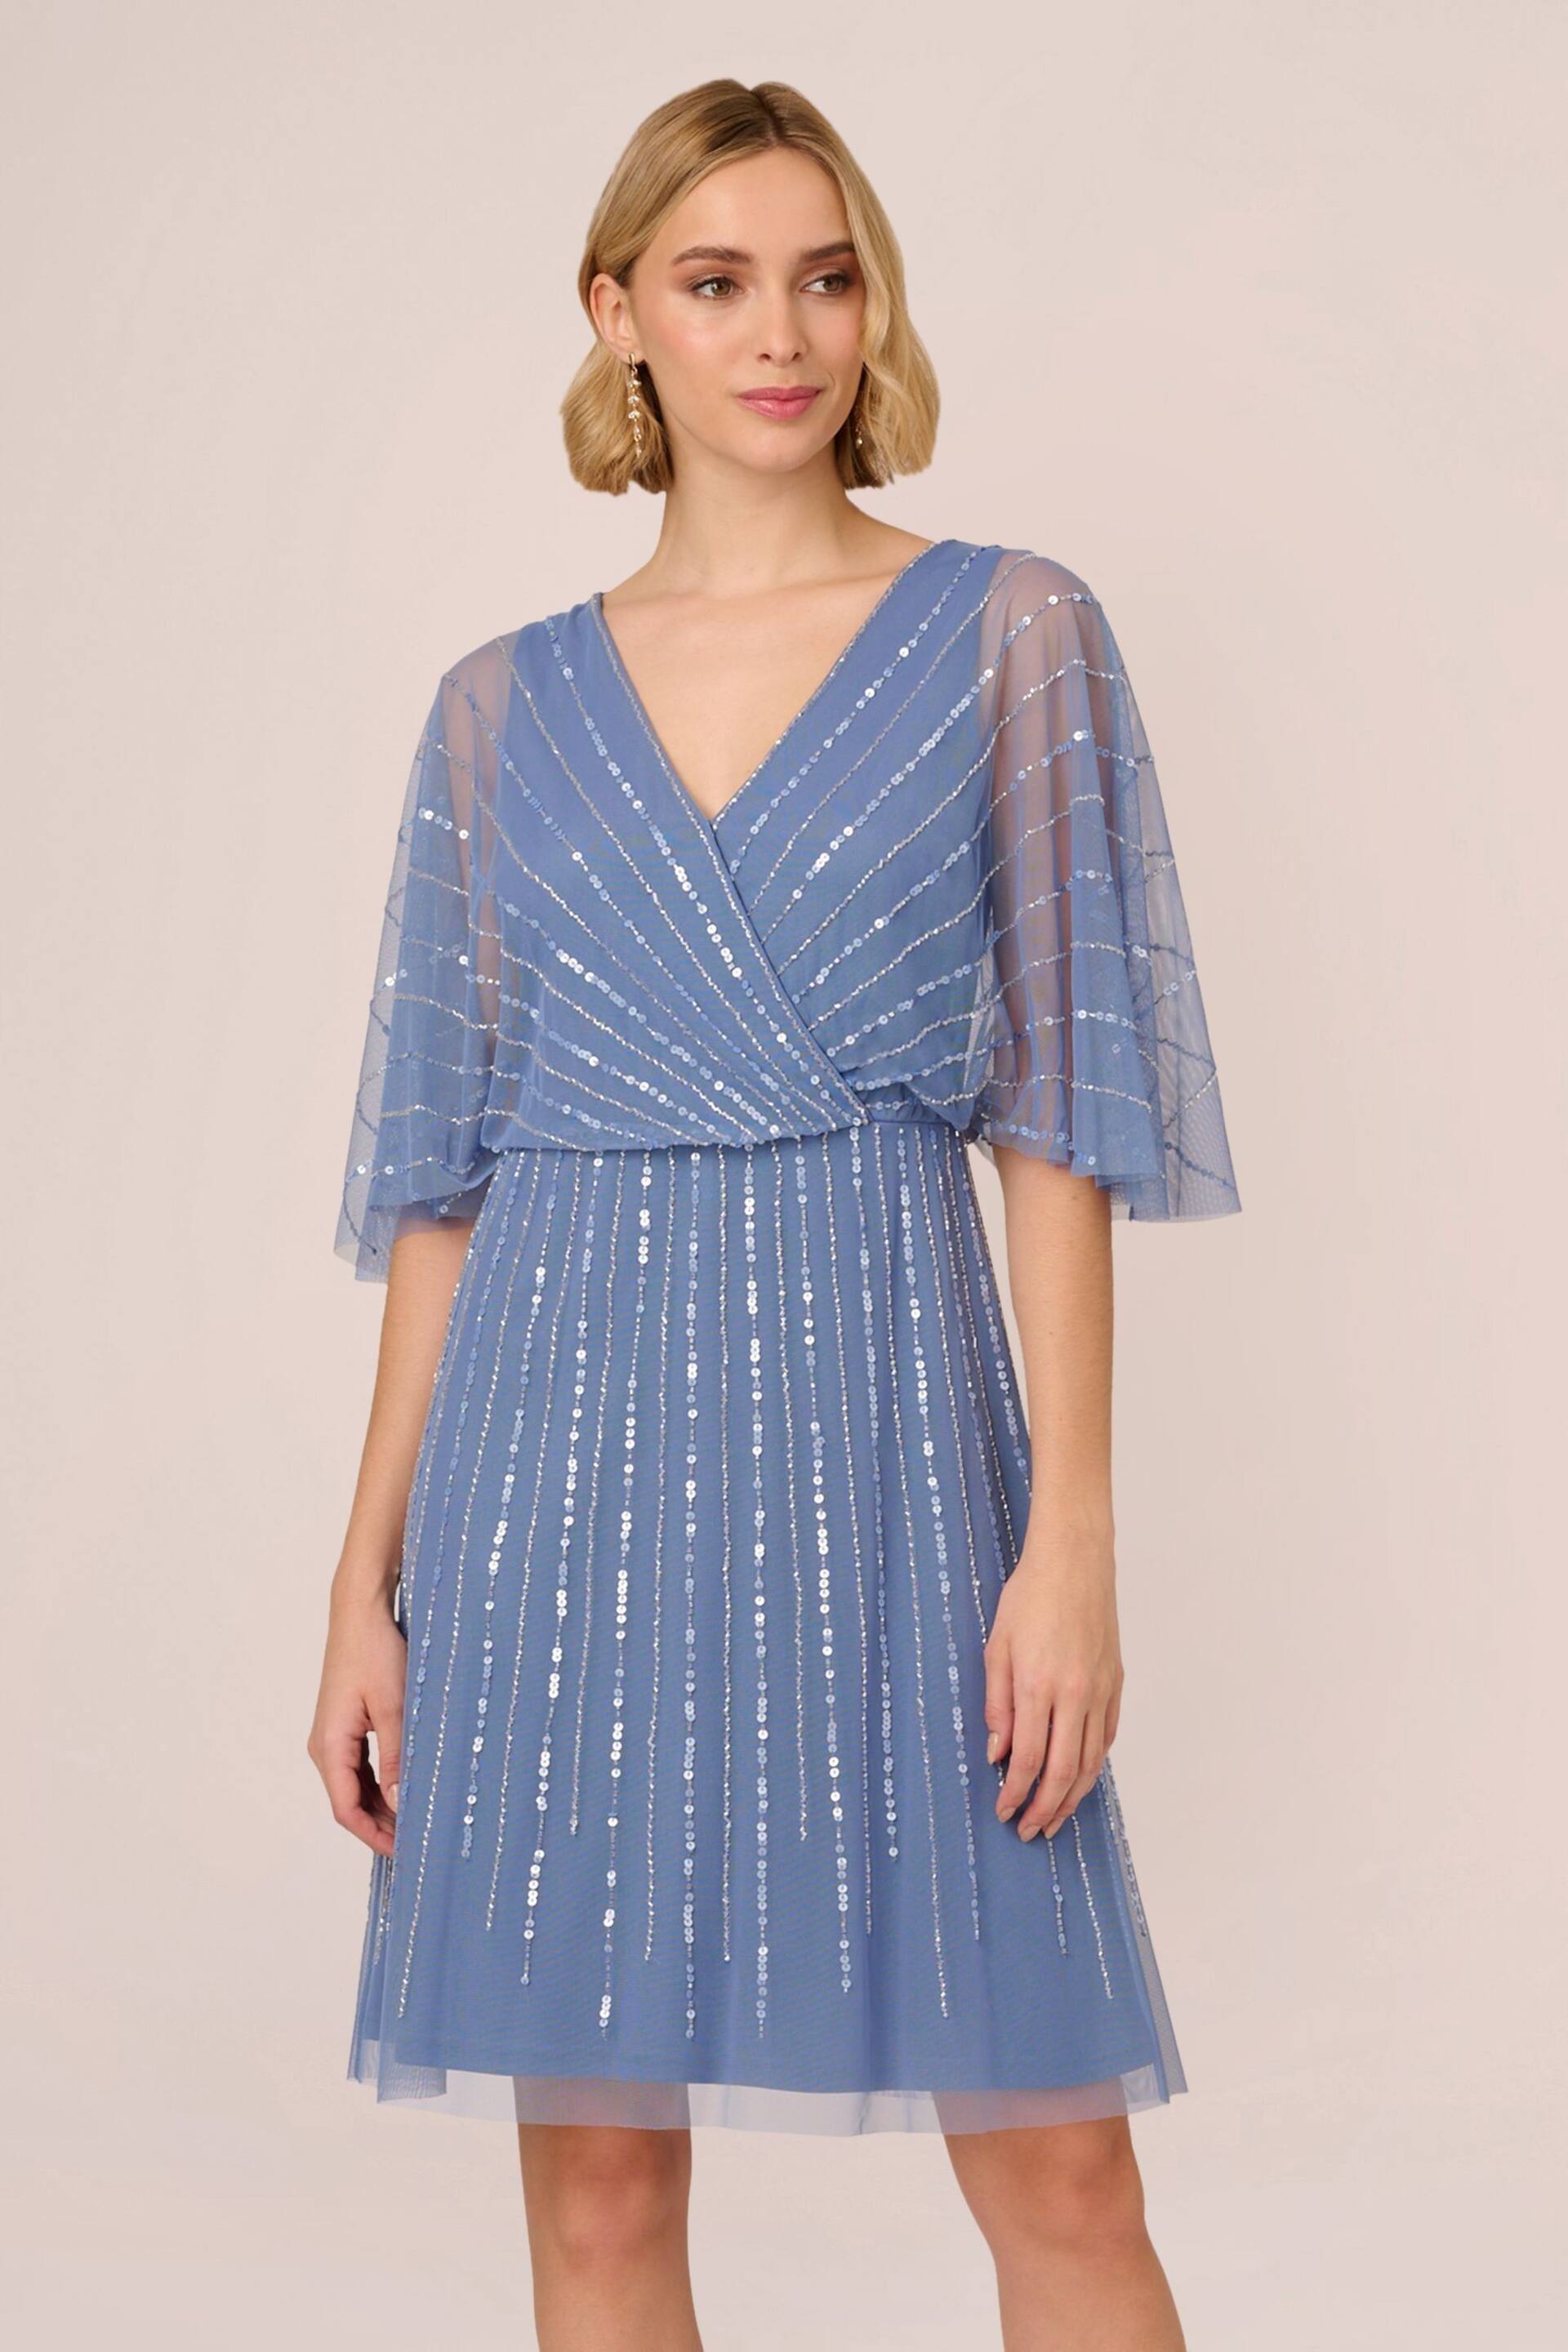 Adrianna Papell Blue Beaded Short Dress - Image 1 of 7